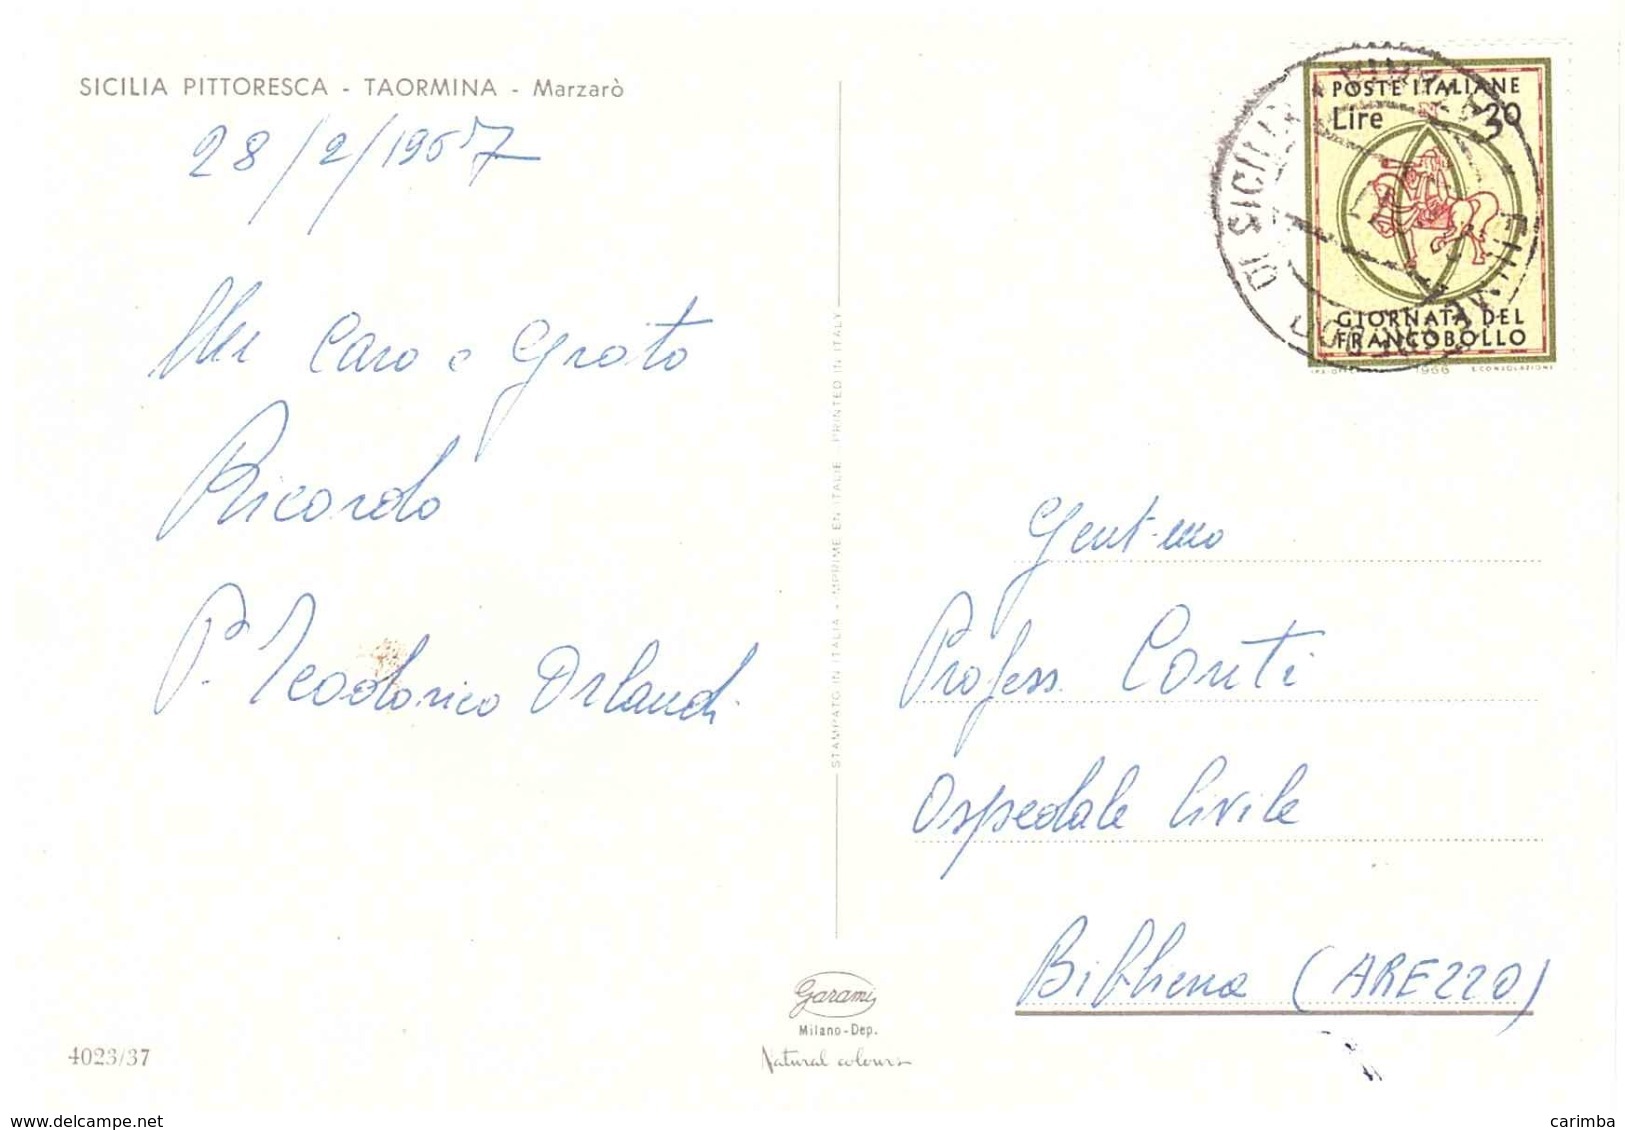 1966 £20 GIORNATA DEL FRANCOBOLLO SU CARTOLINA TAORMINA MARZARO' - Stamp's Day